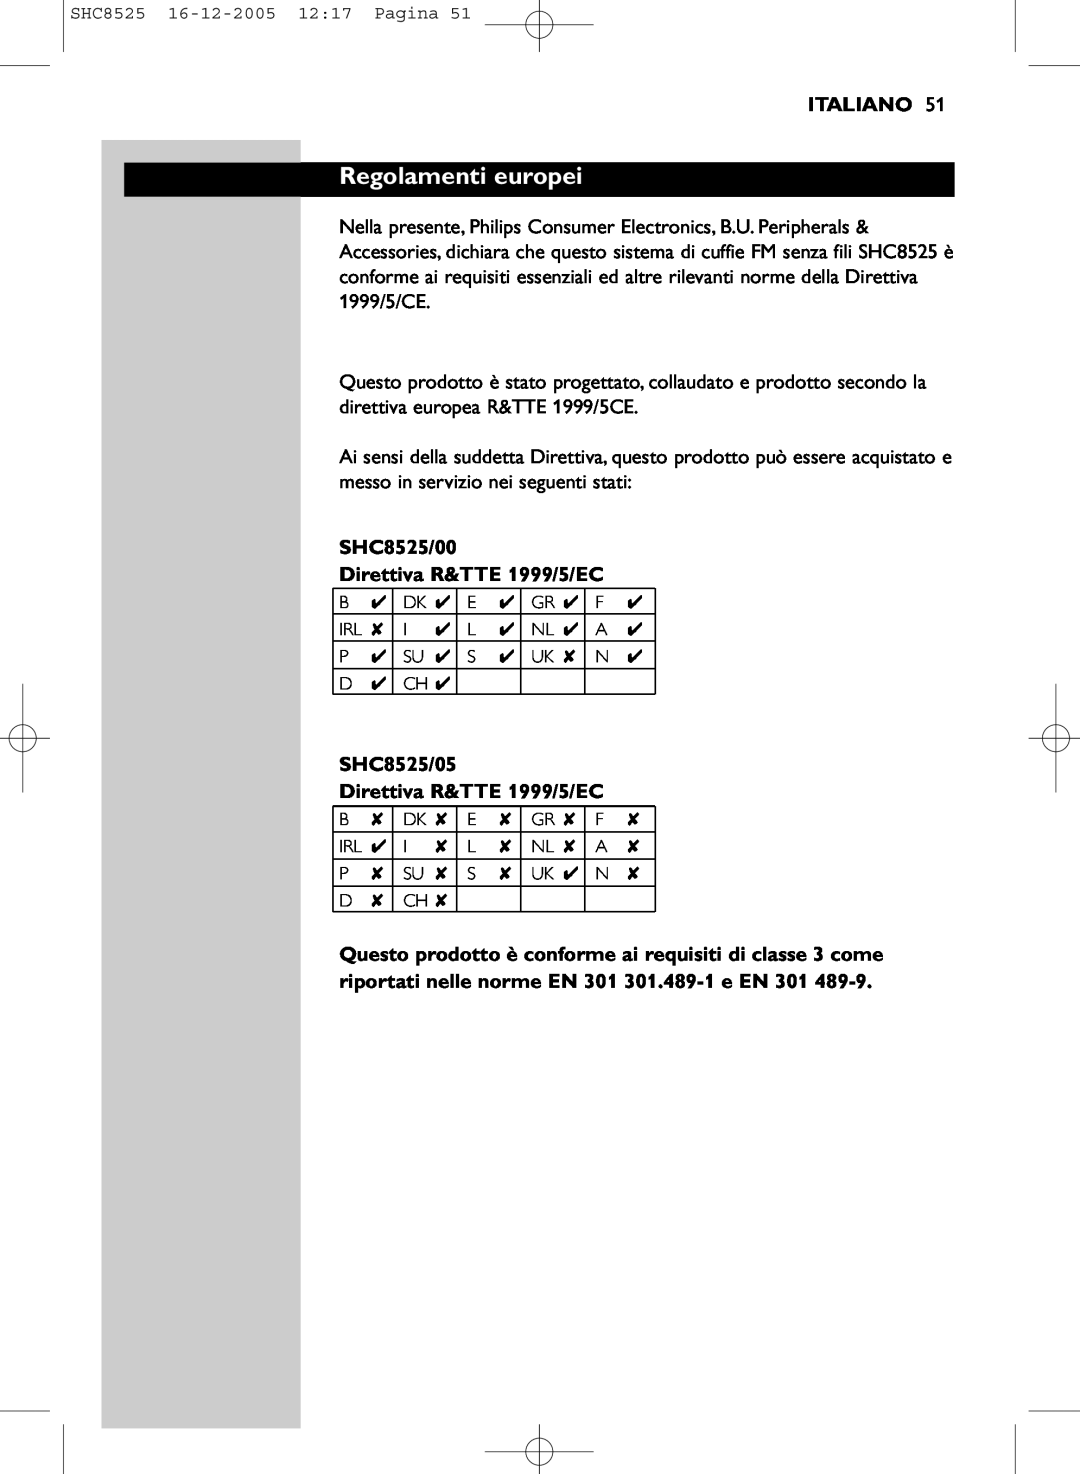 Event electronic manual Regolamenti europei, Italiano, SHC8525/00 Direttiva R&TTE 1999/5/EC 